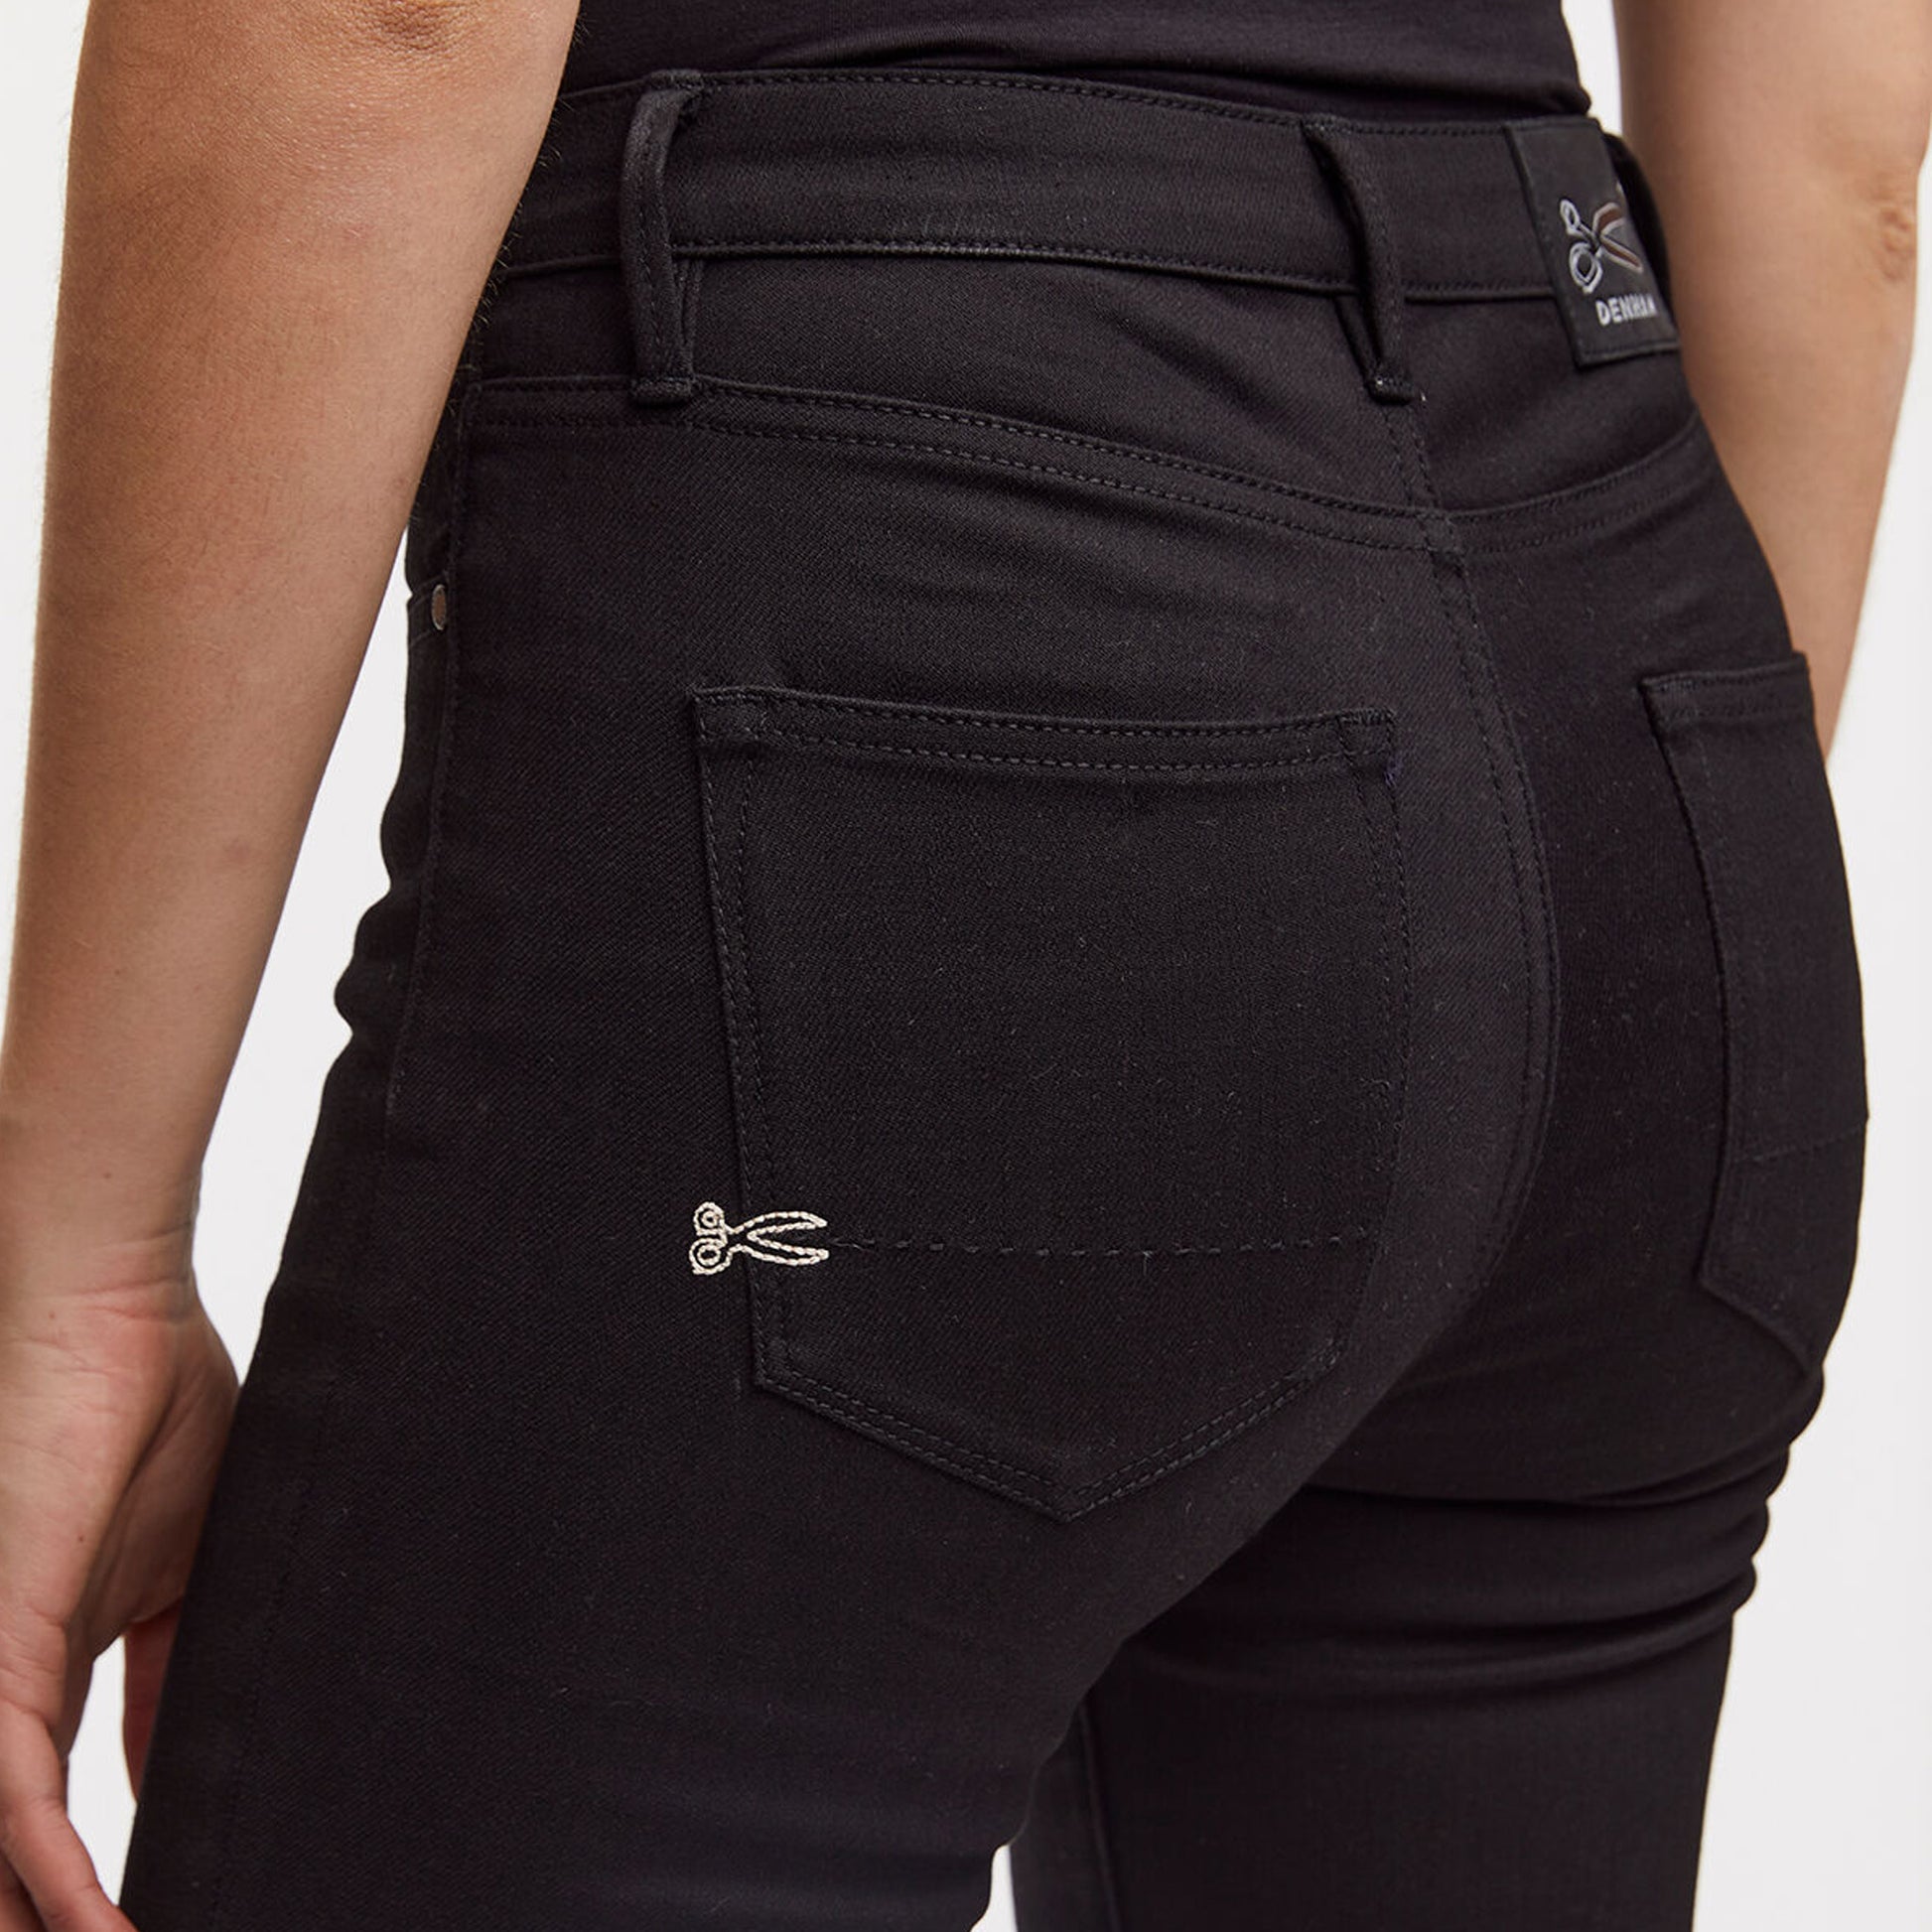 The back view of a woman wearing Denham NEEDLE Skinny - True Black denim jeans.